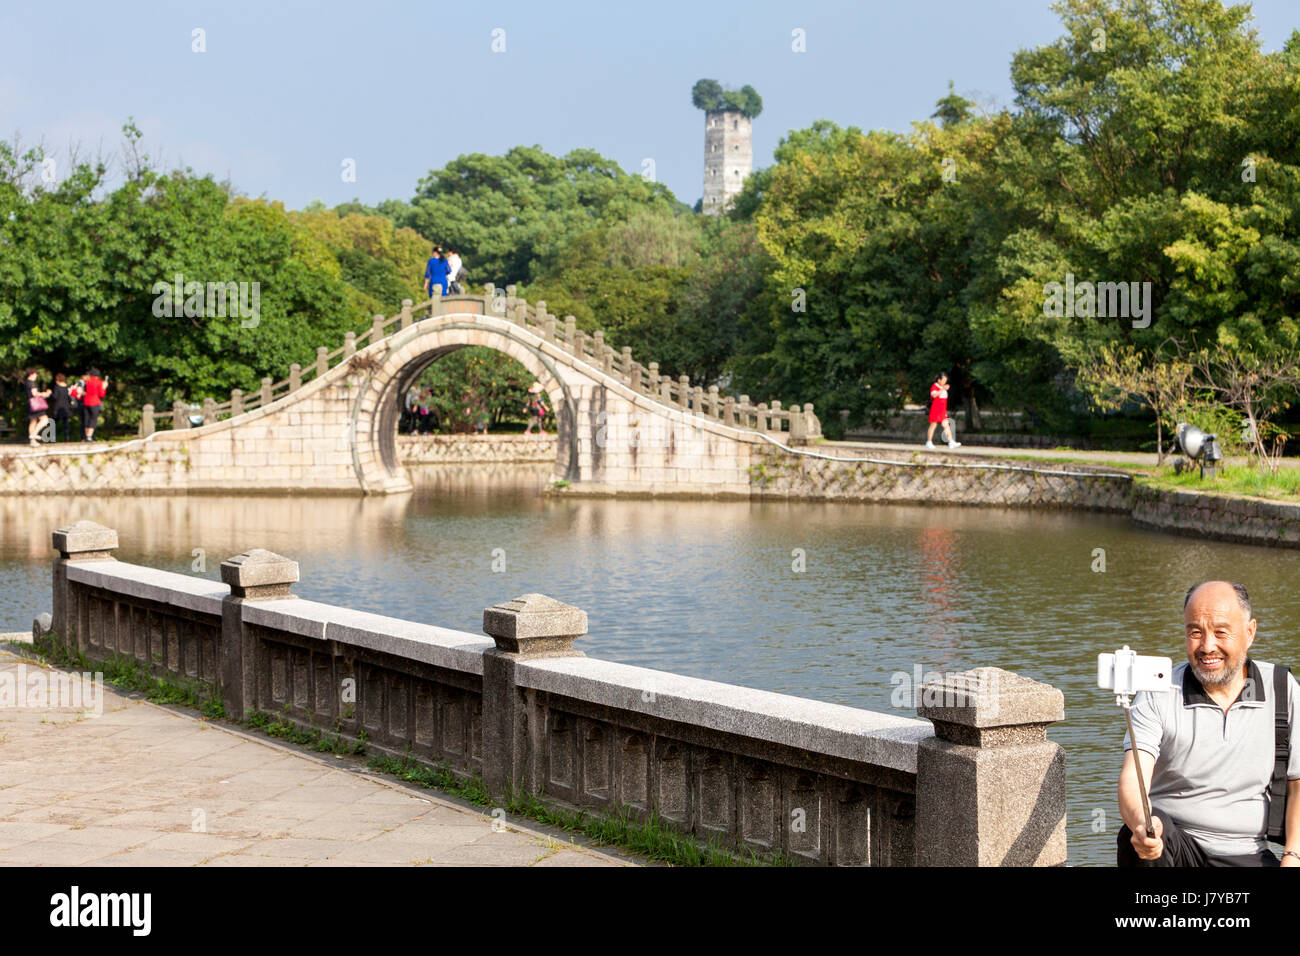 Wenzhou, Zhejiang, Cina. Jiangxin isola. Visitatore cinese facendo una Selfie dalla Luna Bridge. Oriente Pagoda in background, ricostruita 1141. Foto Stock